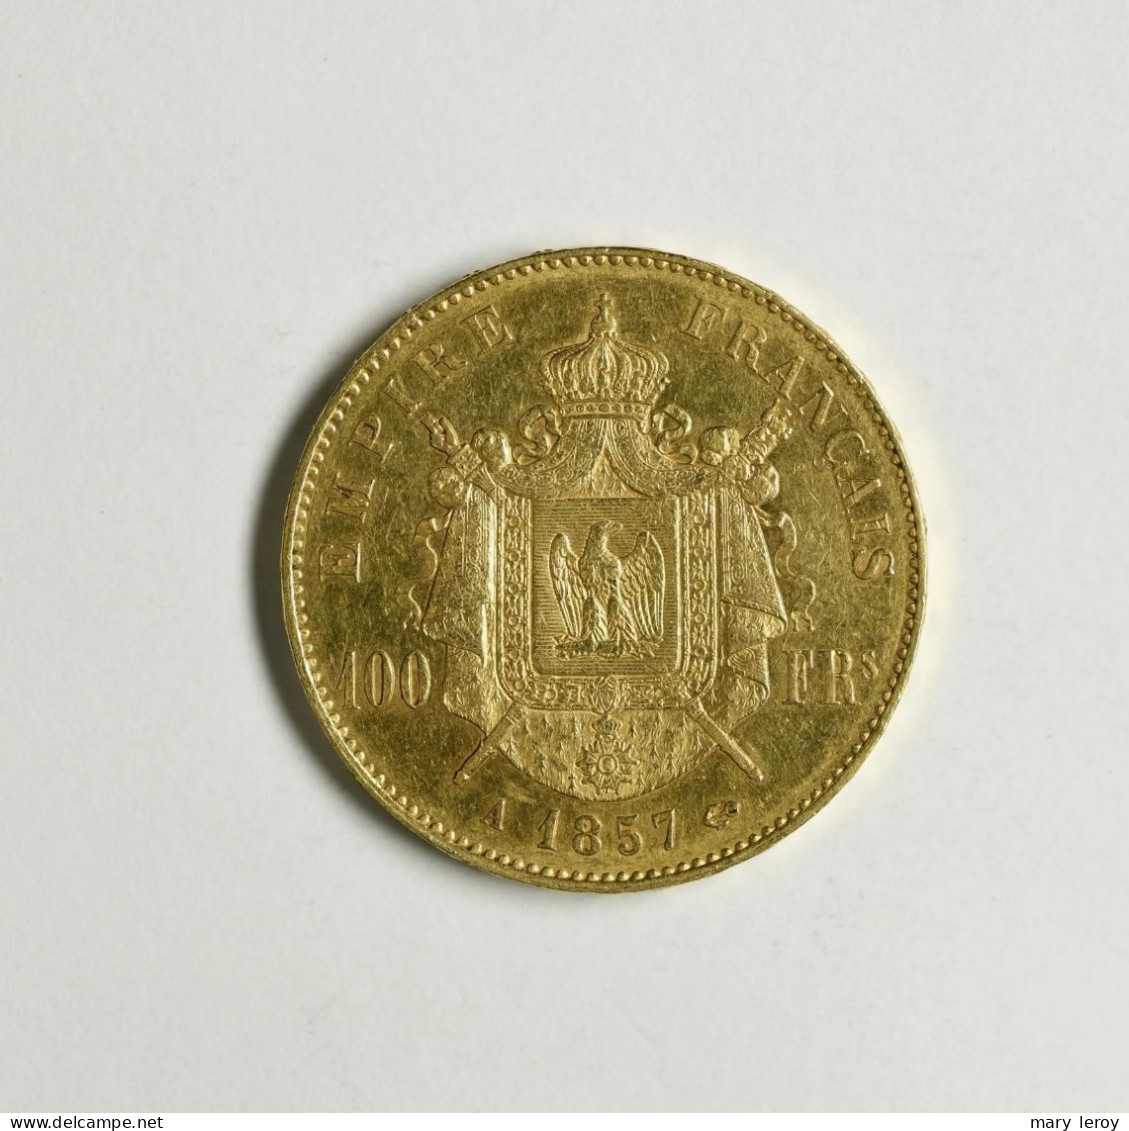 Superbe & Rare Pièce De 100 Francs Or Napoléon III Paris 1857 G. 1135 - 100 Francs-or